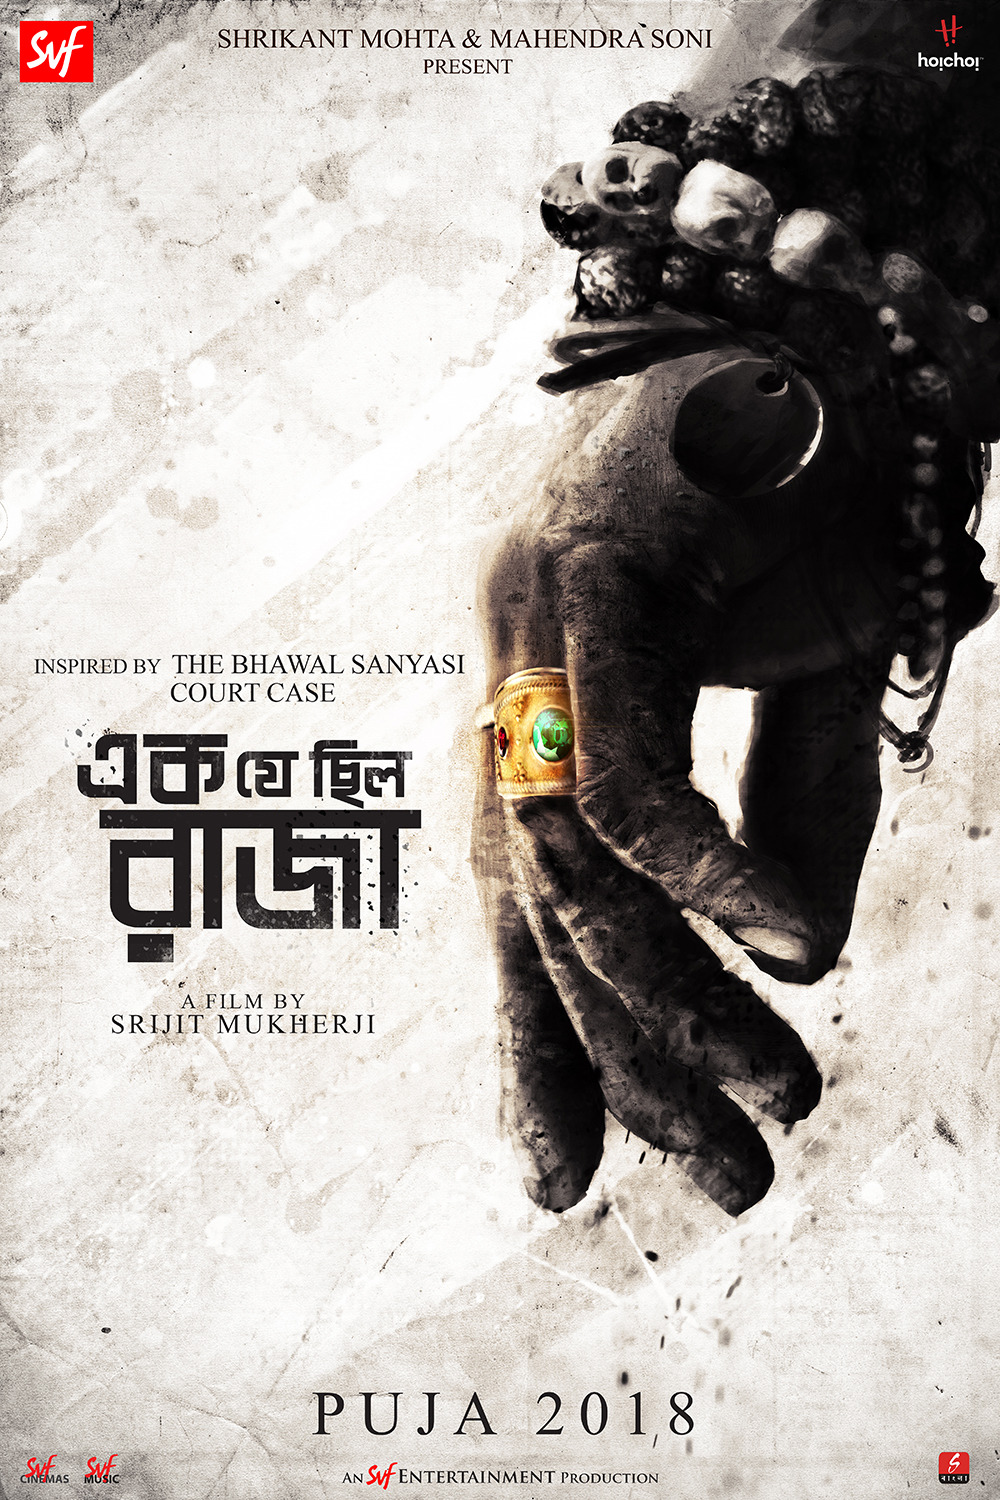 Extra Large Movie Poster Image for Ek Je Chhilo Raja (#4 of 5)